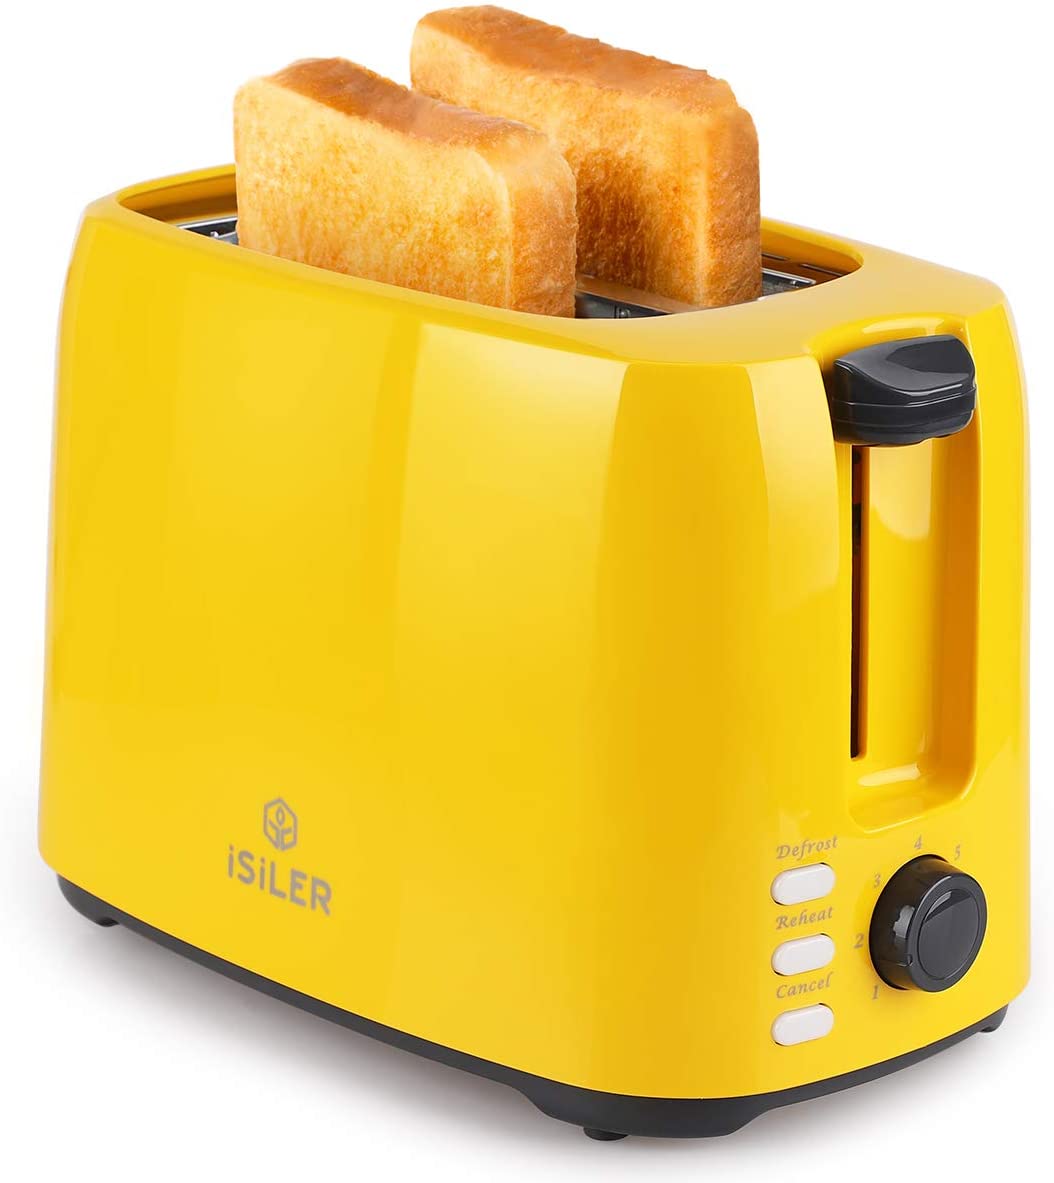 iSiLER Stainless Steel Energy Saving Toaster, 2-Slice